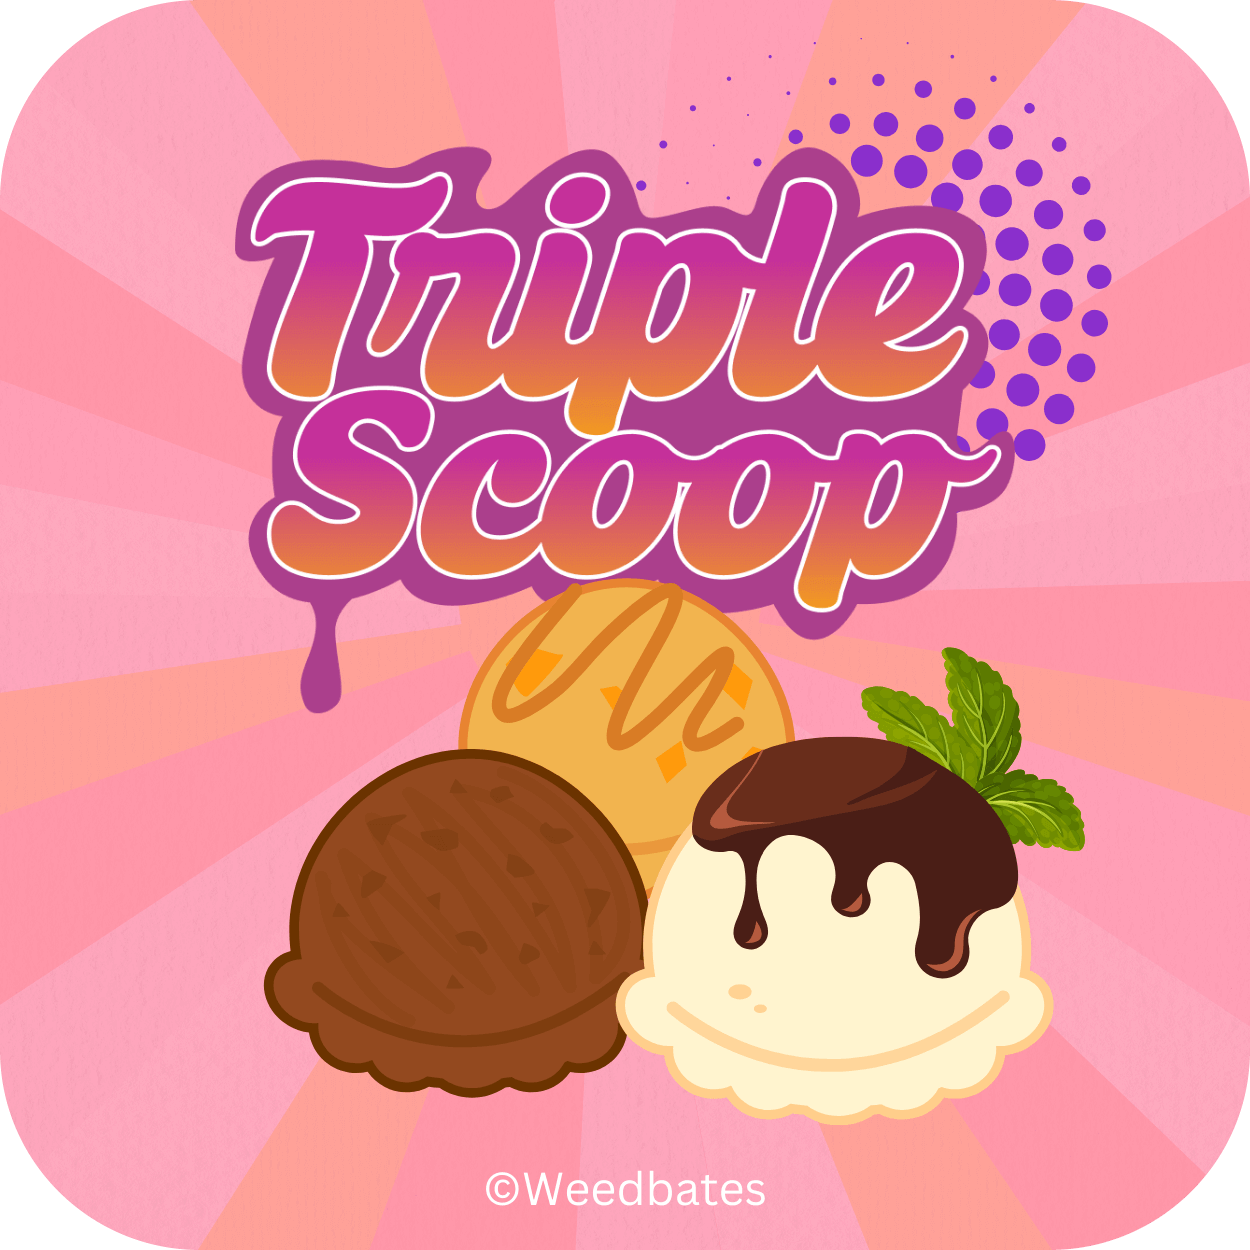 Triple Scoop strain